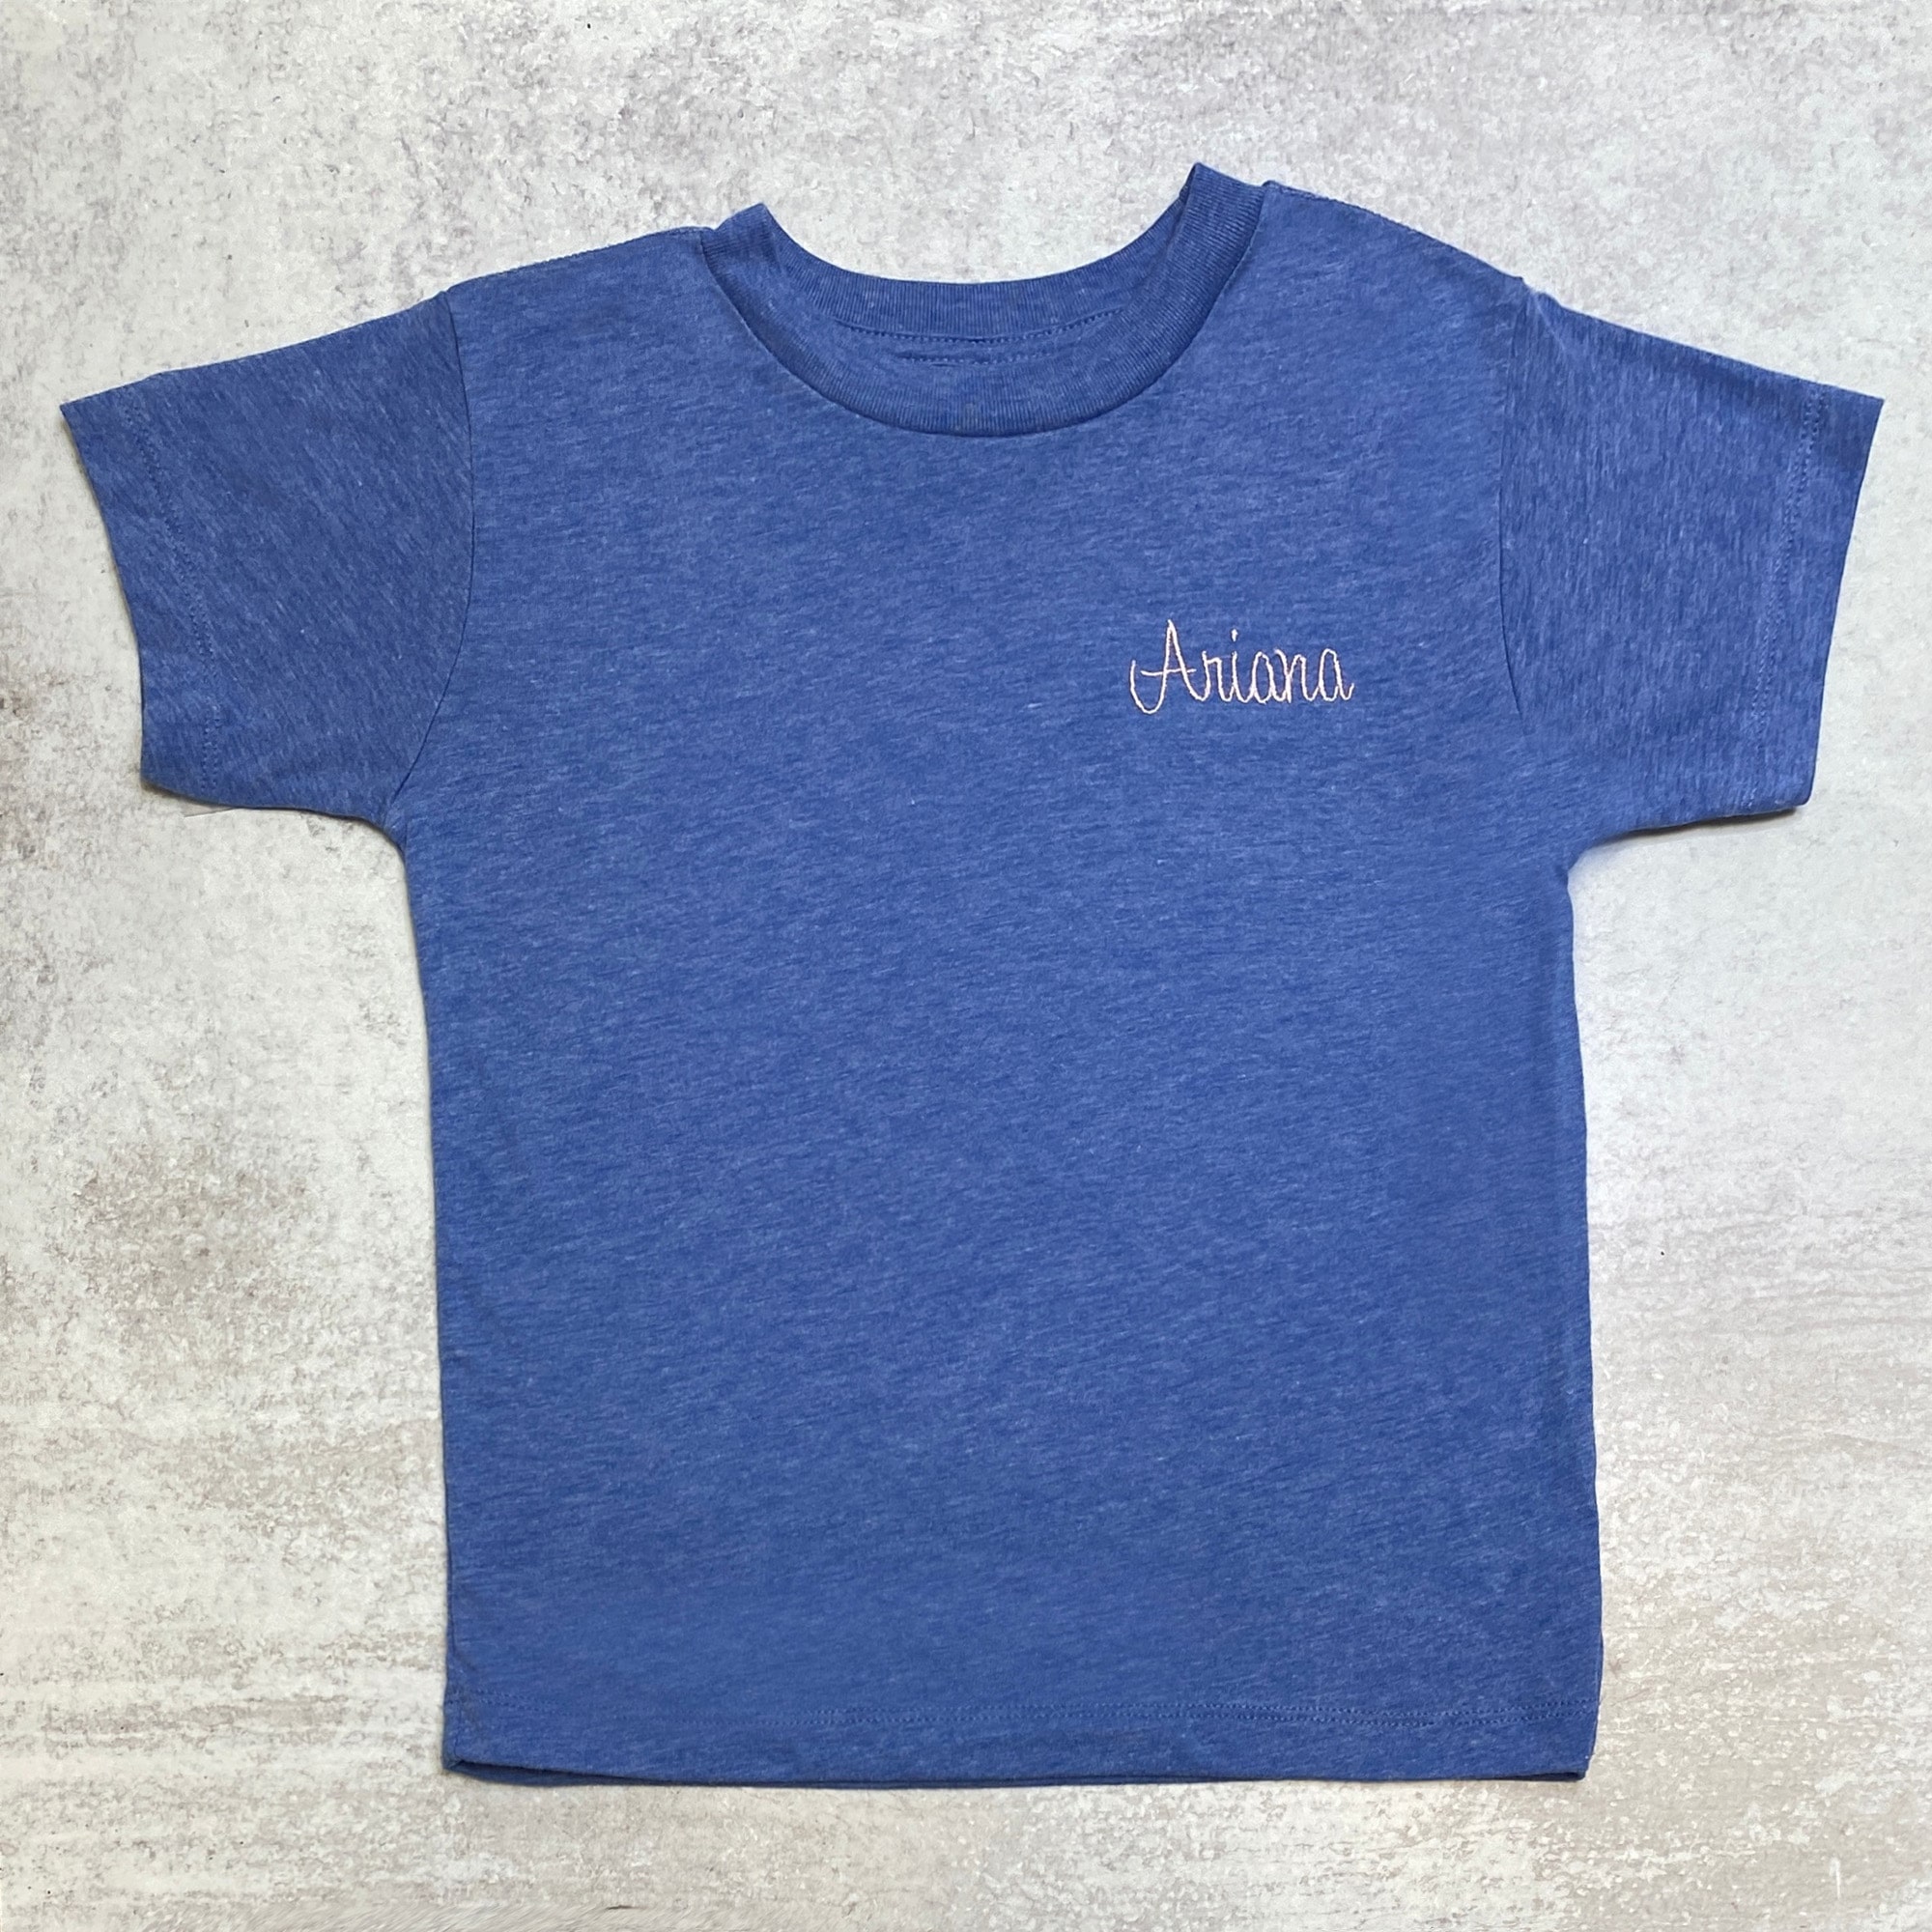 Kleding Unisex kinderkleding Tops & T-shirts T-shirts 18 mo-10 Lightweight Unisex Sweatshirt Light Blue Hand Letter Font or Large Monogram Toddler Boys Long Sleeve Boutique Quality Cotton 